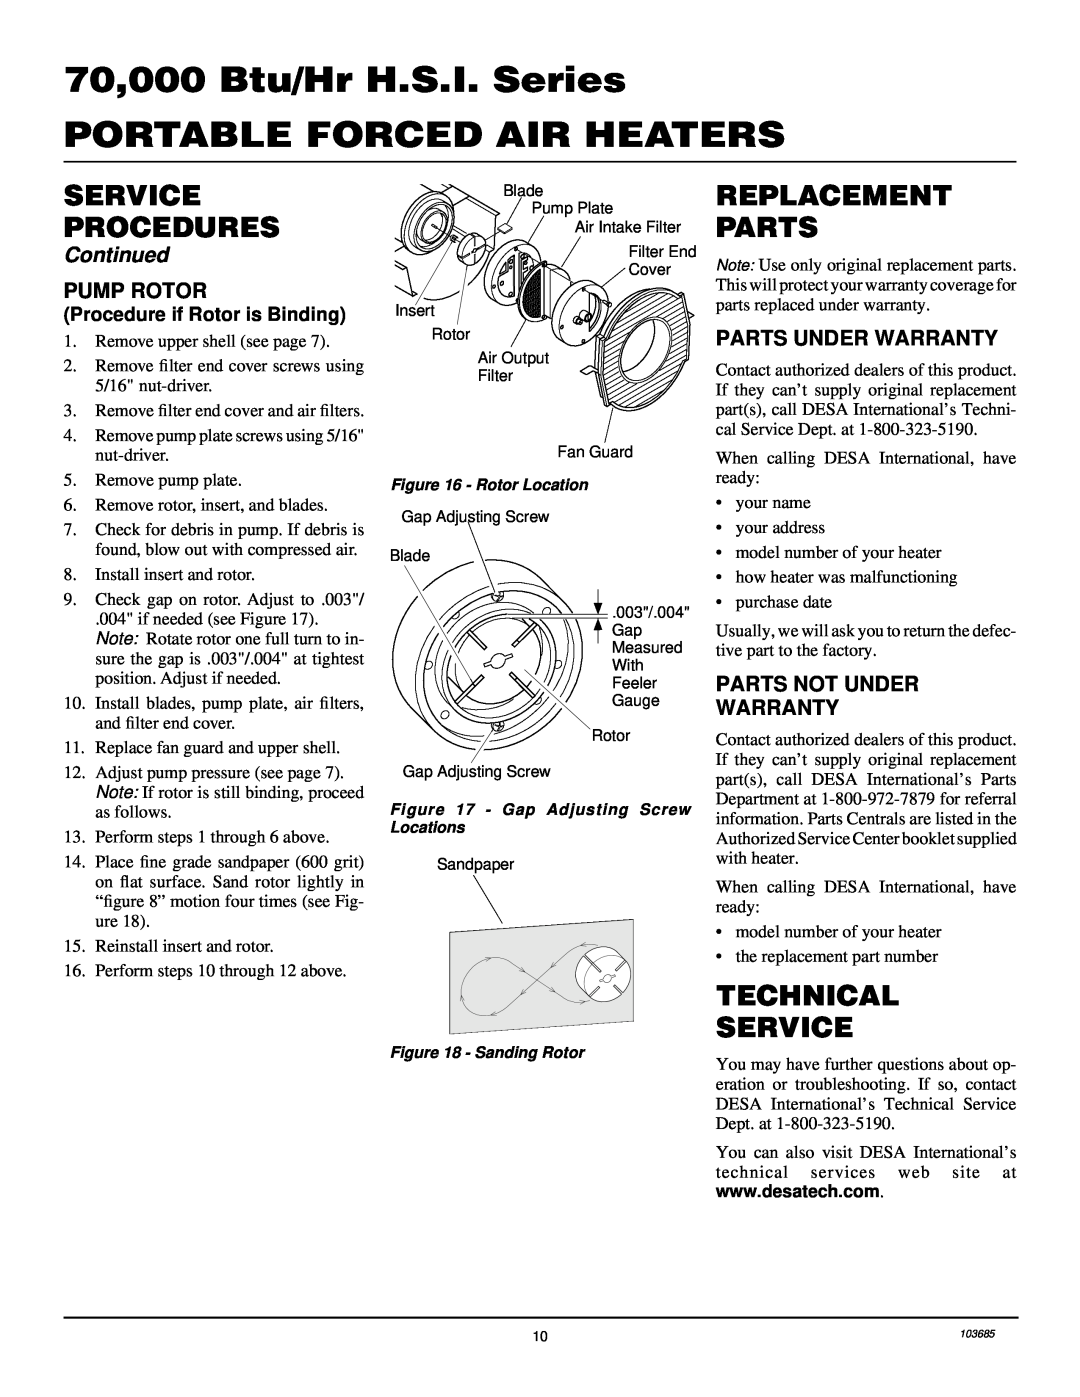 Desa B70D Replacement Parts, Technical Service, Pump Rotor, Parts Under Warranty, Parts Not Under Warranty, Continued 